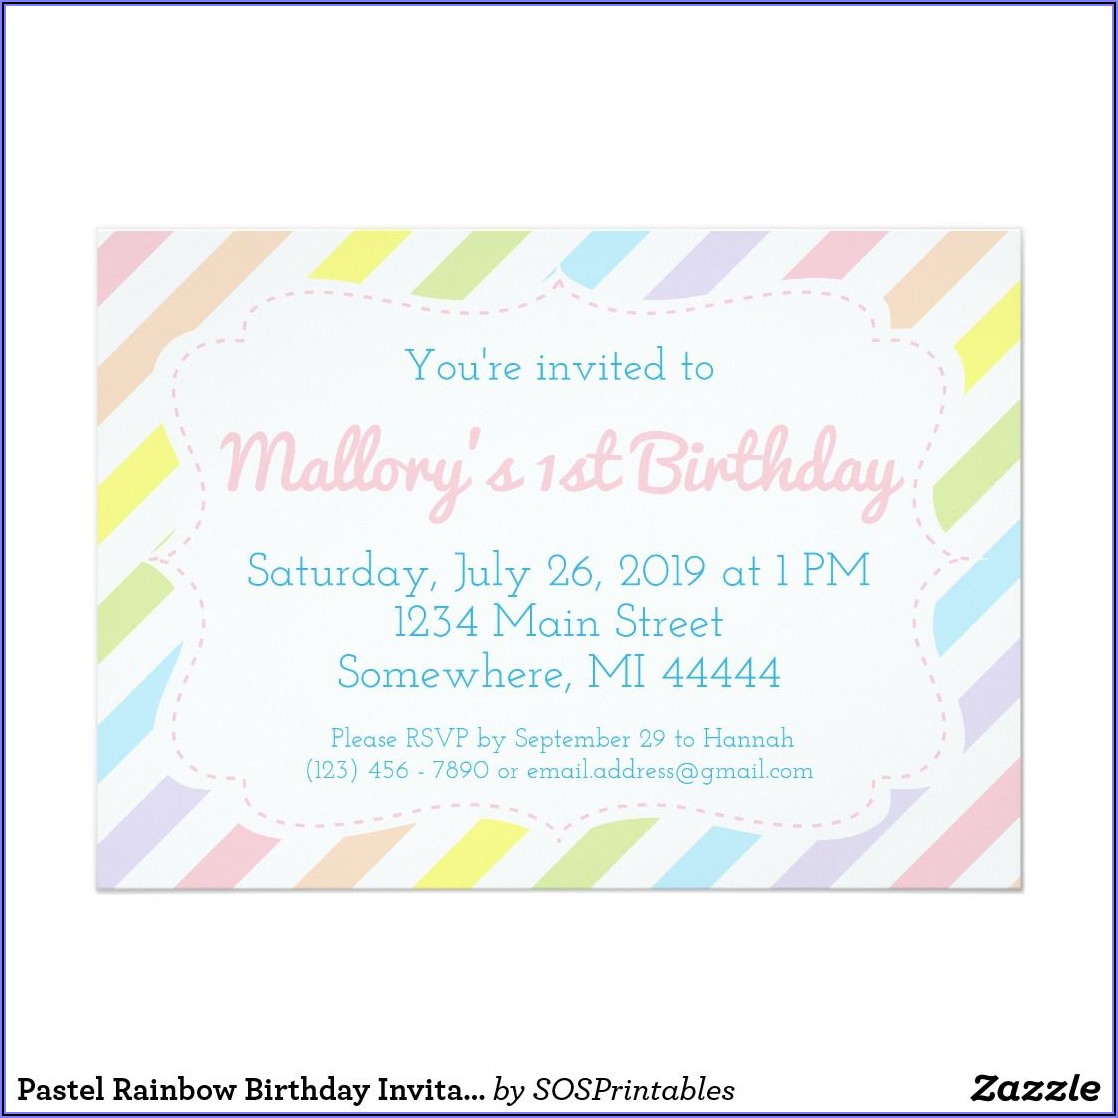 Pastel Rainbow Birthday Invitations